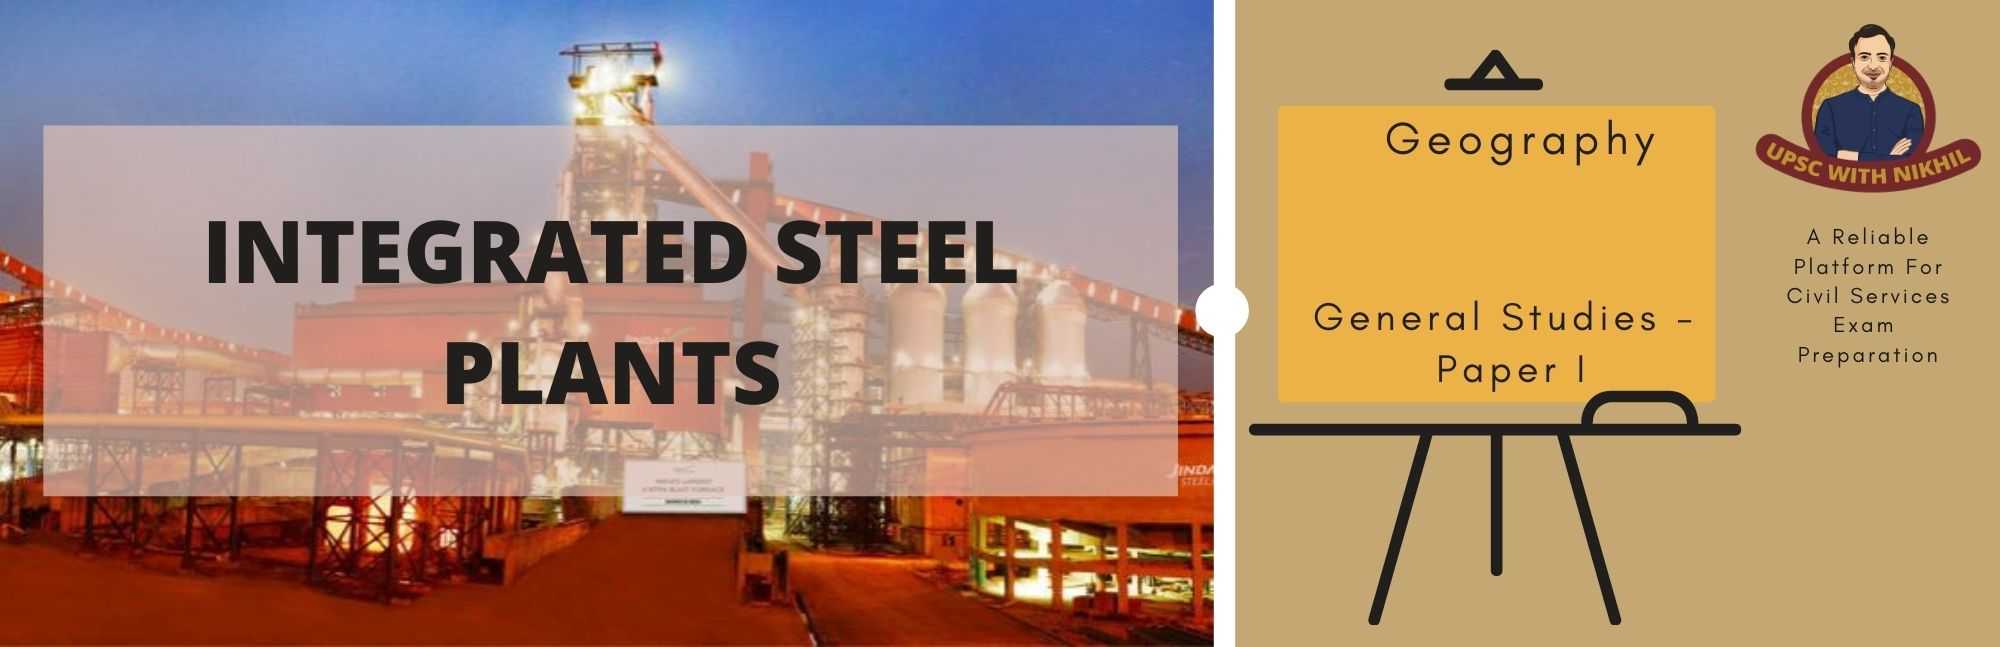 Integrated Steel Plants